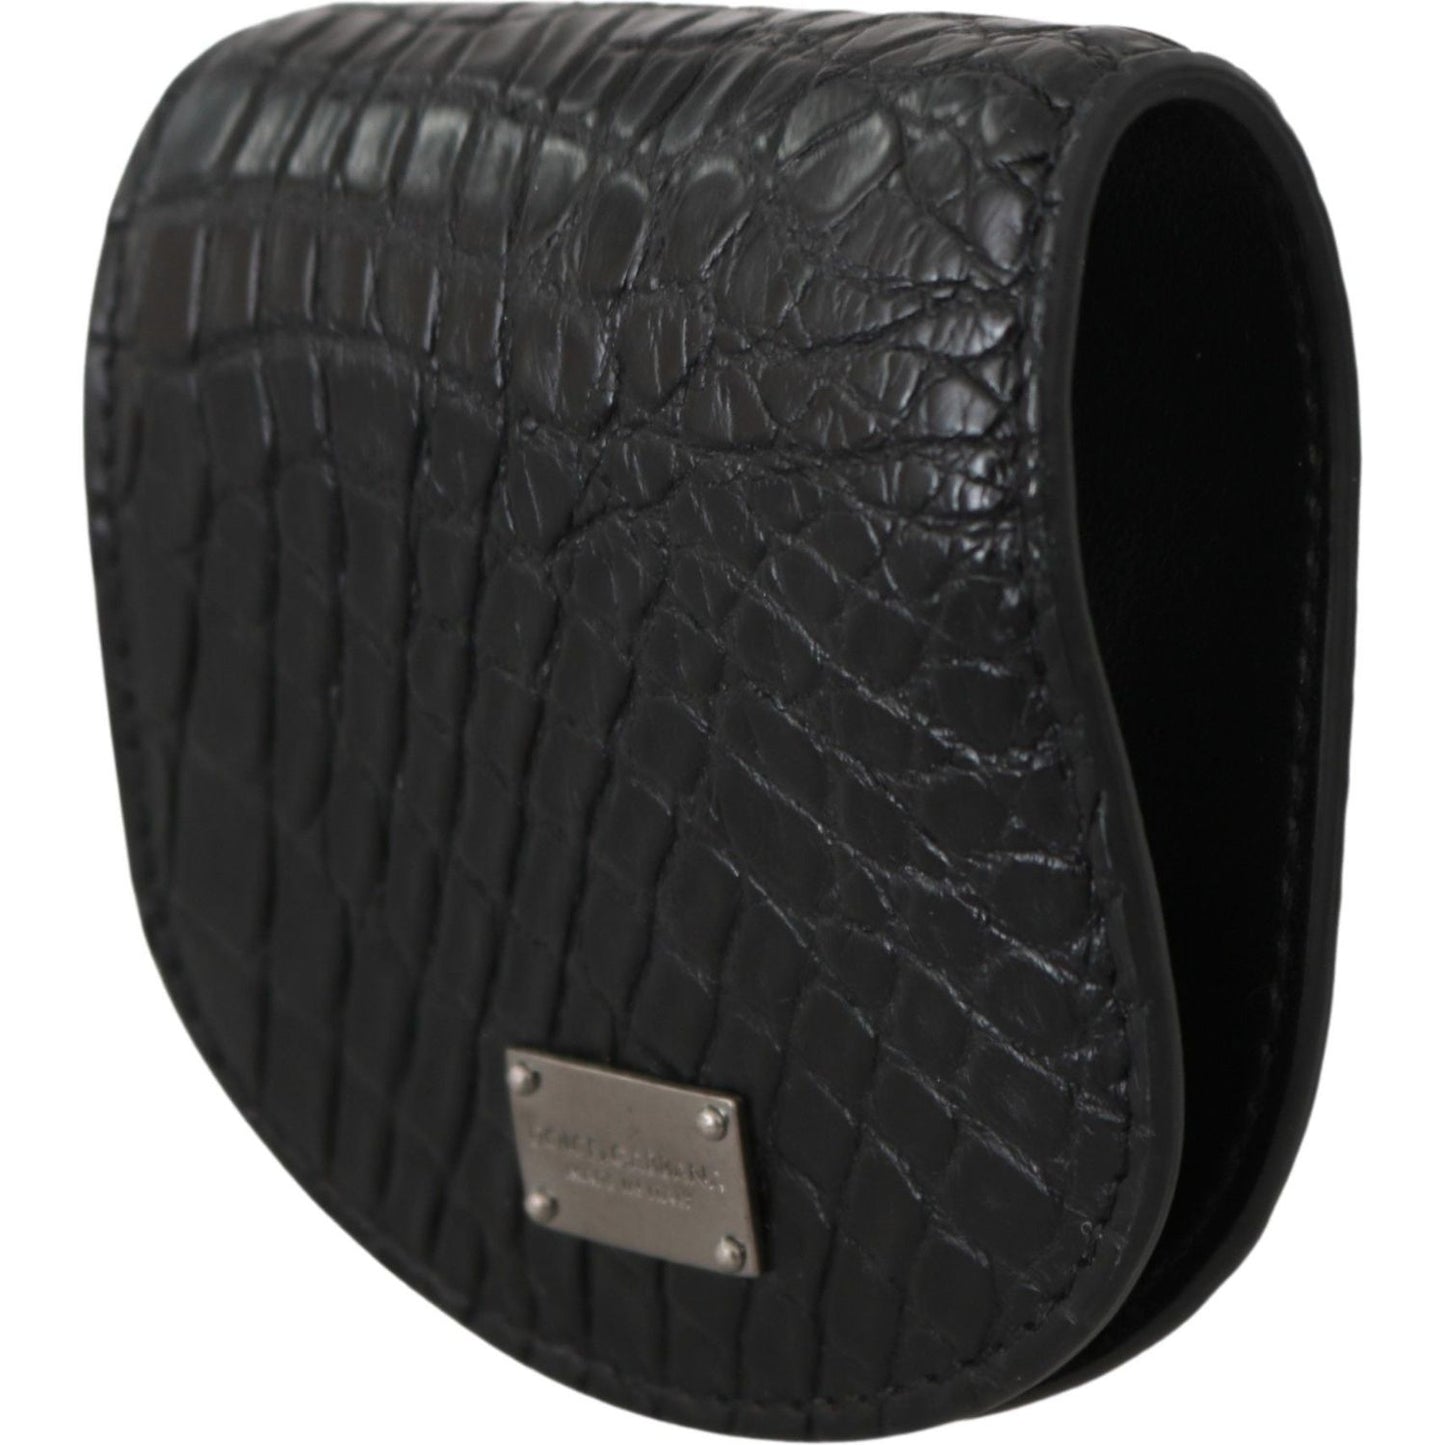 Dolce & Gabbana Sleek Black Leather Coin Case Wallet Condom Case black-exotic-skin-pocket-condom-case-holder IMG_0230-2dd0314c-3ec.jpg